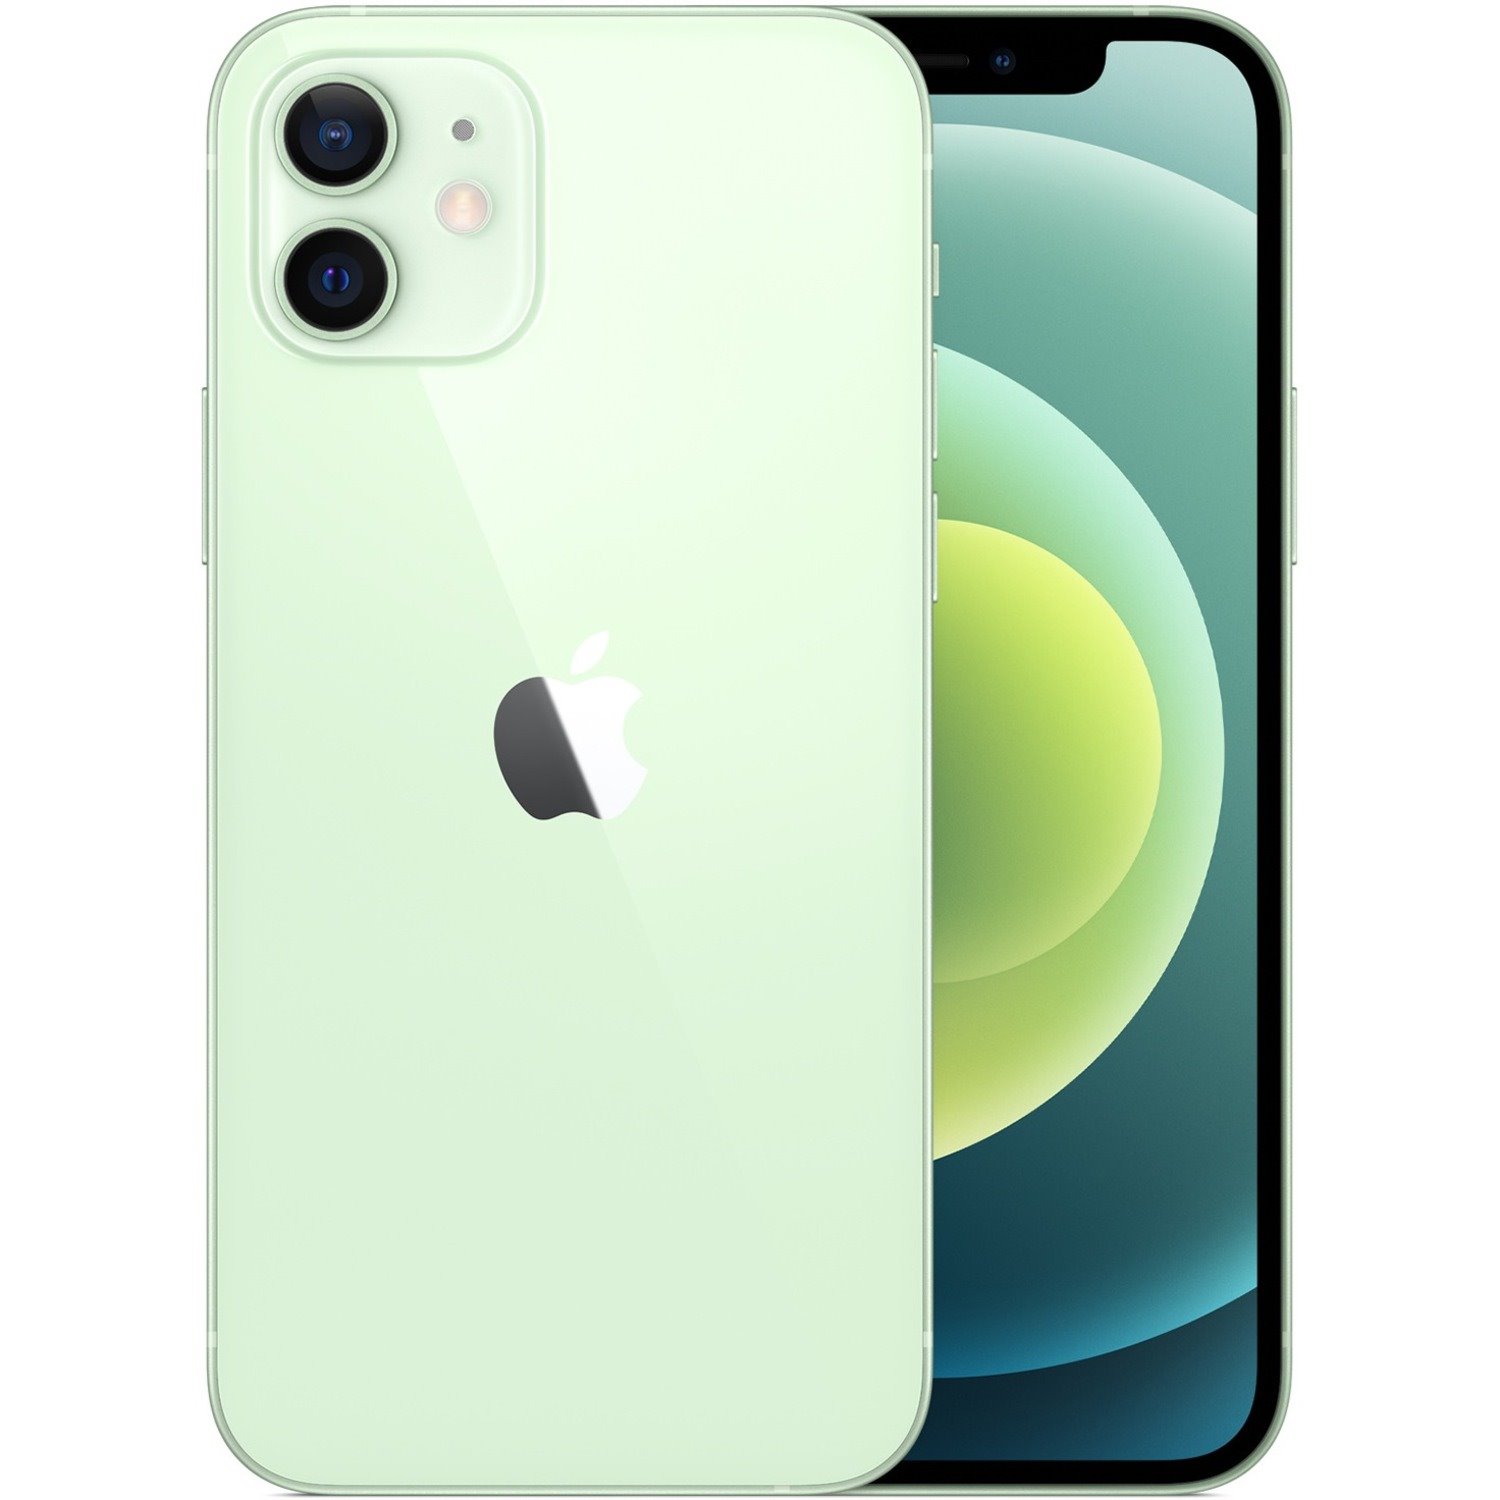 Apple iPhone 12 mini 128 GB Smartphone - 13.7 cm (5.4") OLED Full HD Plus 2340 x 1080 - Hexa-core (6 Core) - iOS 14 - 5G - Green